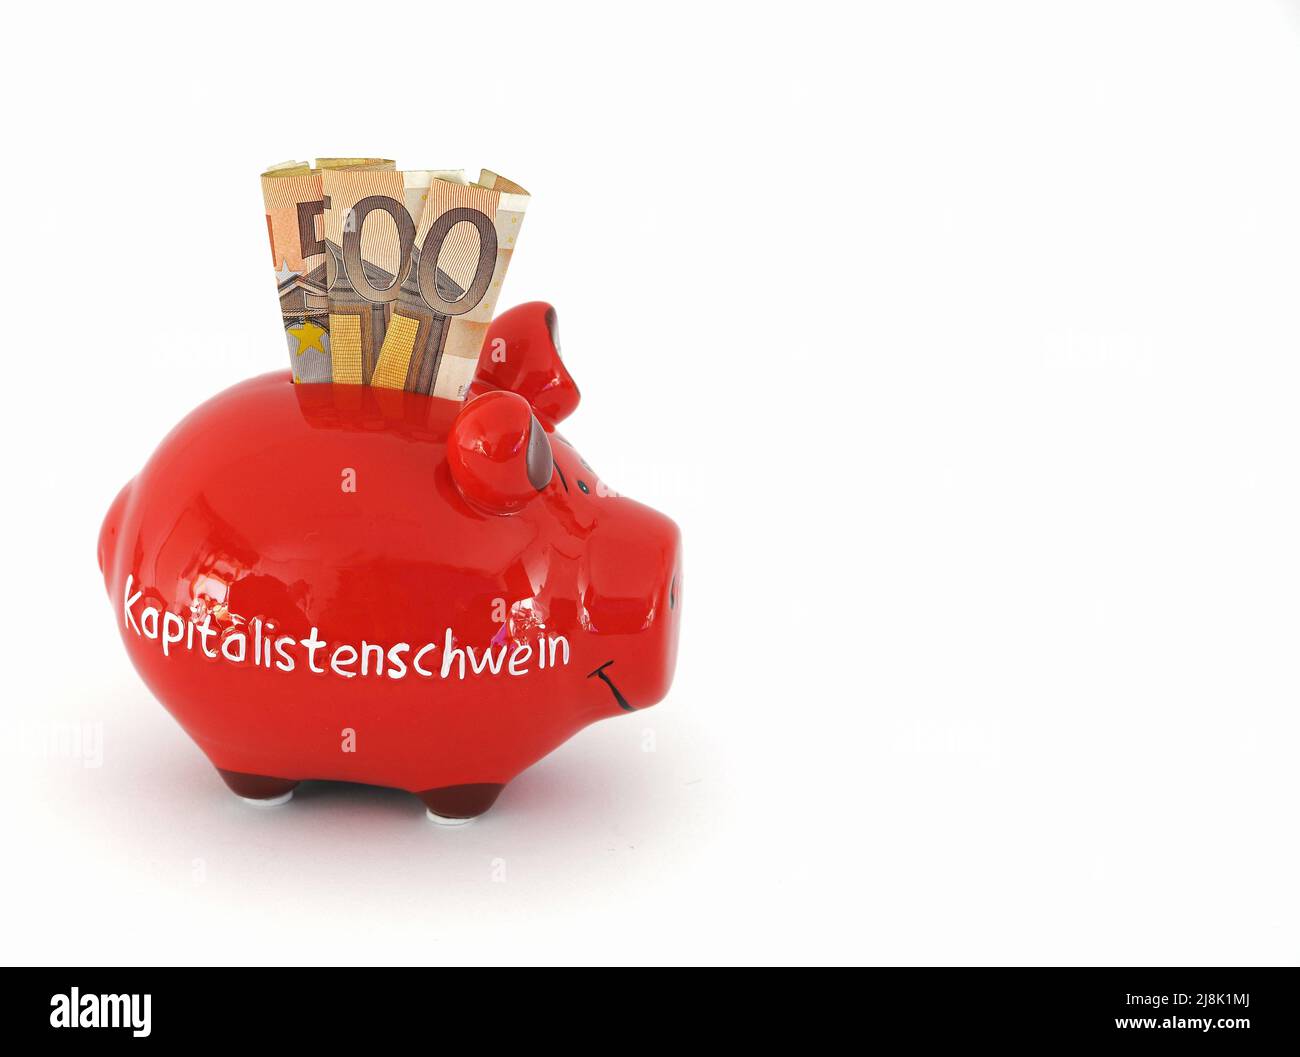 Letras de banco piggy Kapitalistenschwein, cerdo capitalista con monedas de 50 euros Foto de stock